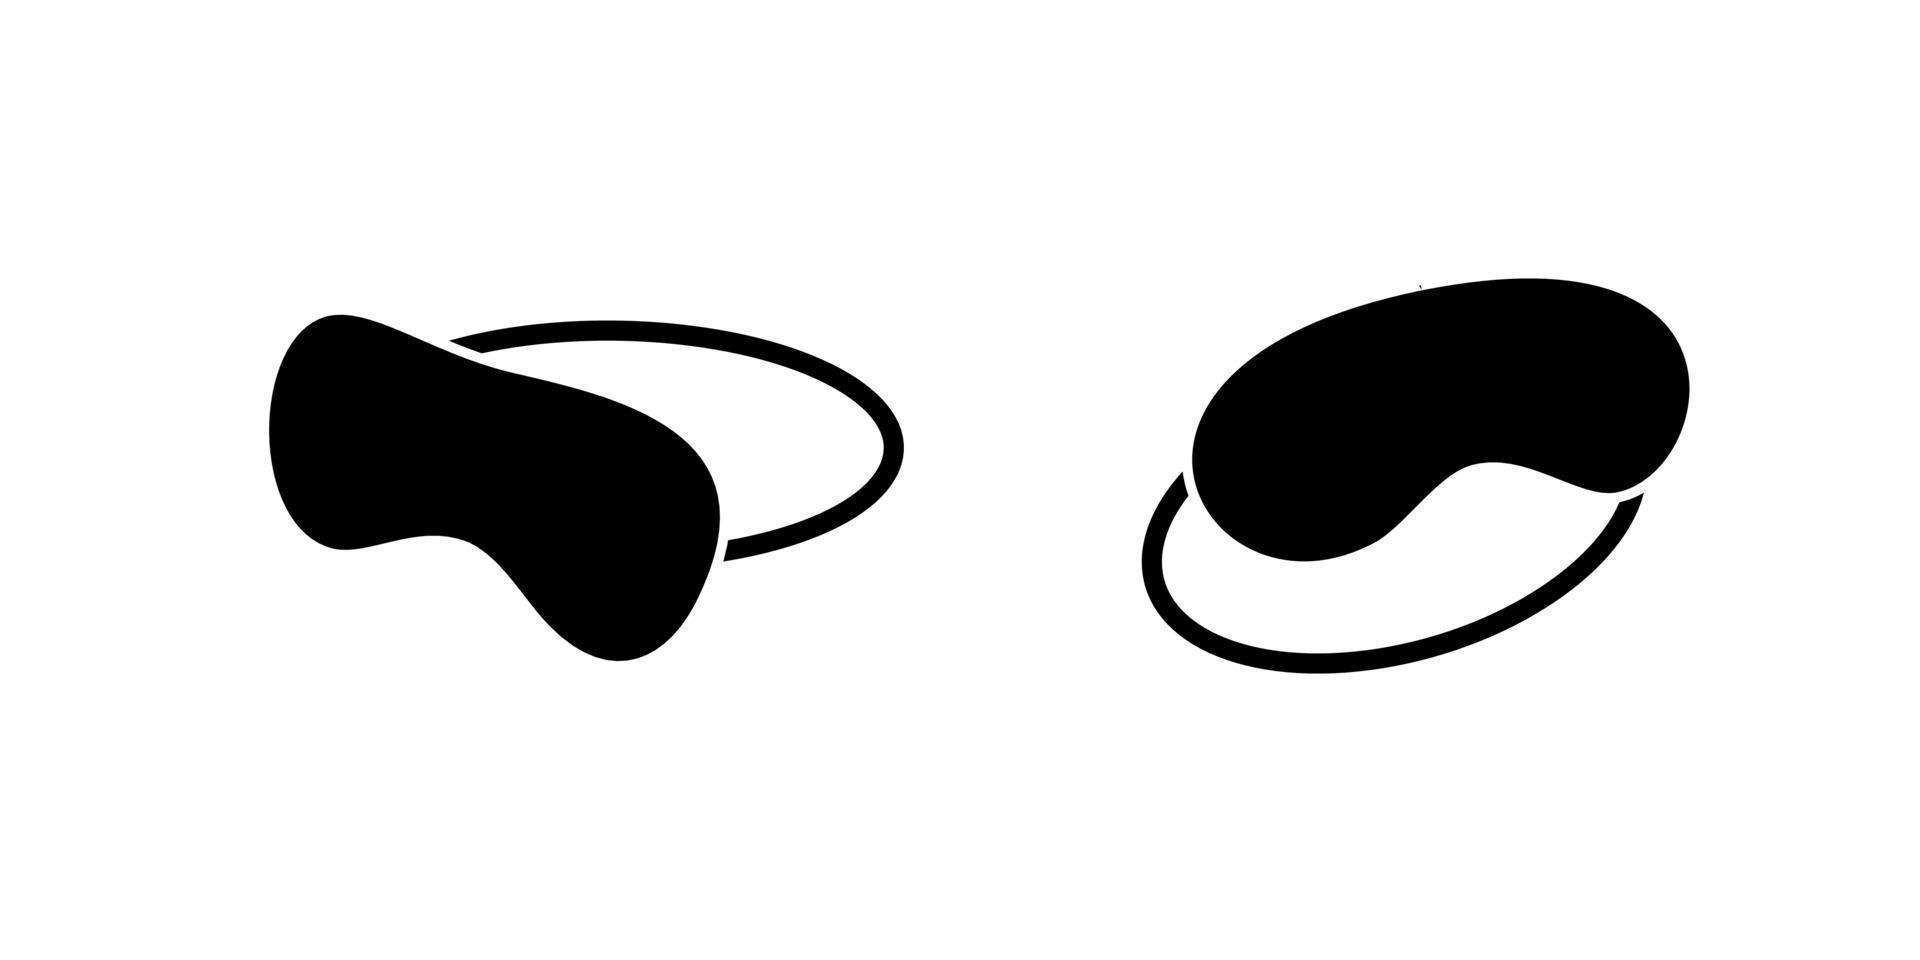 sleep mask - vector illustration isolated on white background. close your eyes at night. eye patch